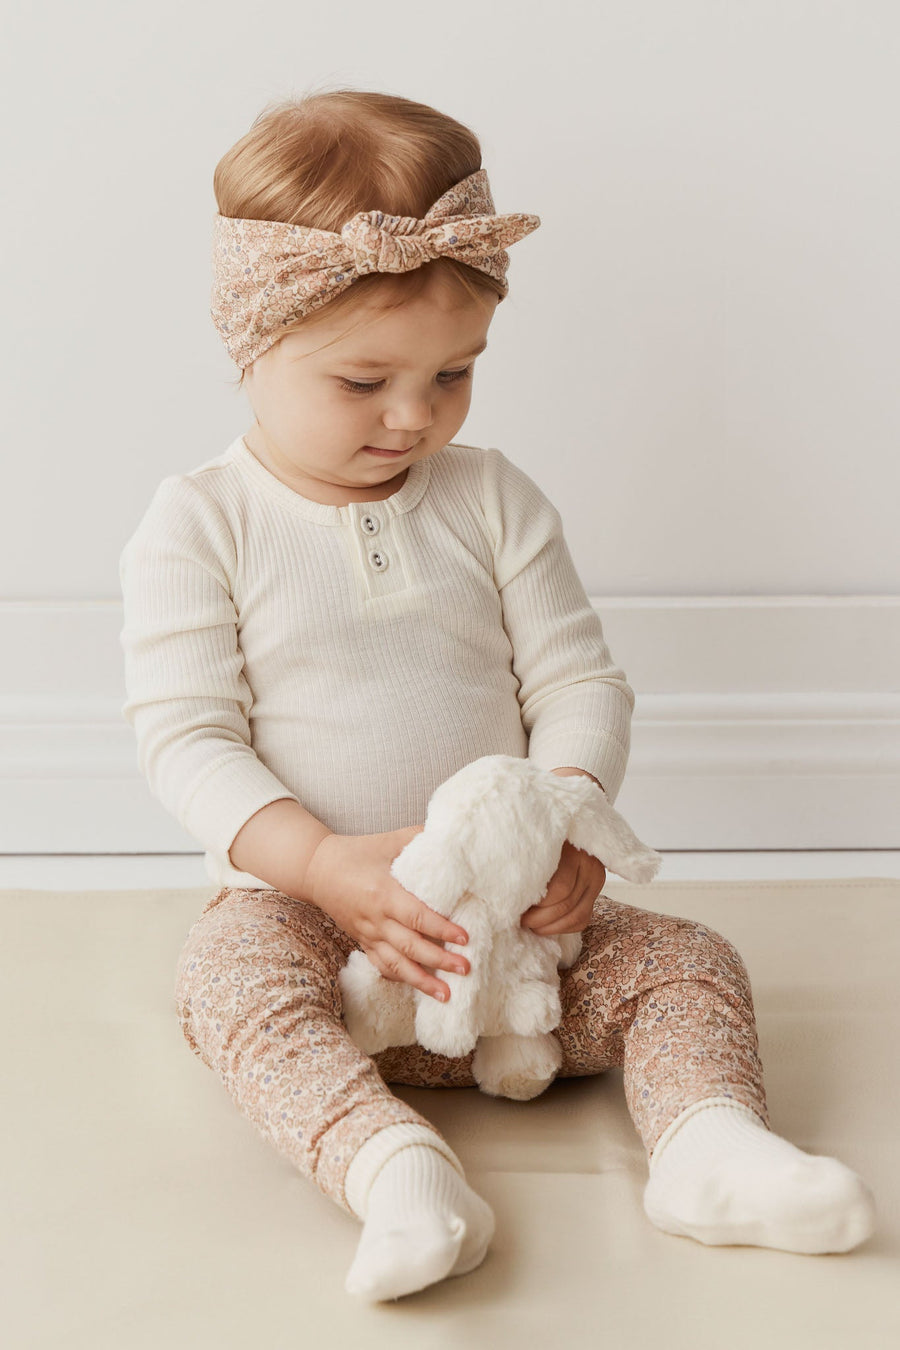 Organic Cotton Everyday Legging - Chloe Pink Tint Childrens Legging from Jamie Kay NZ